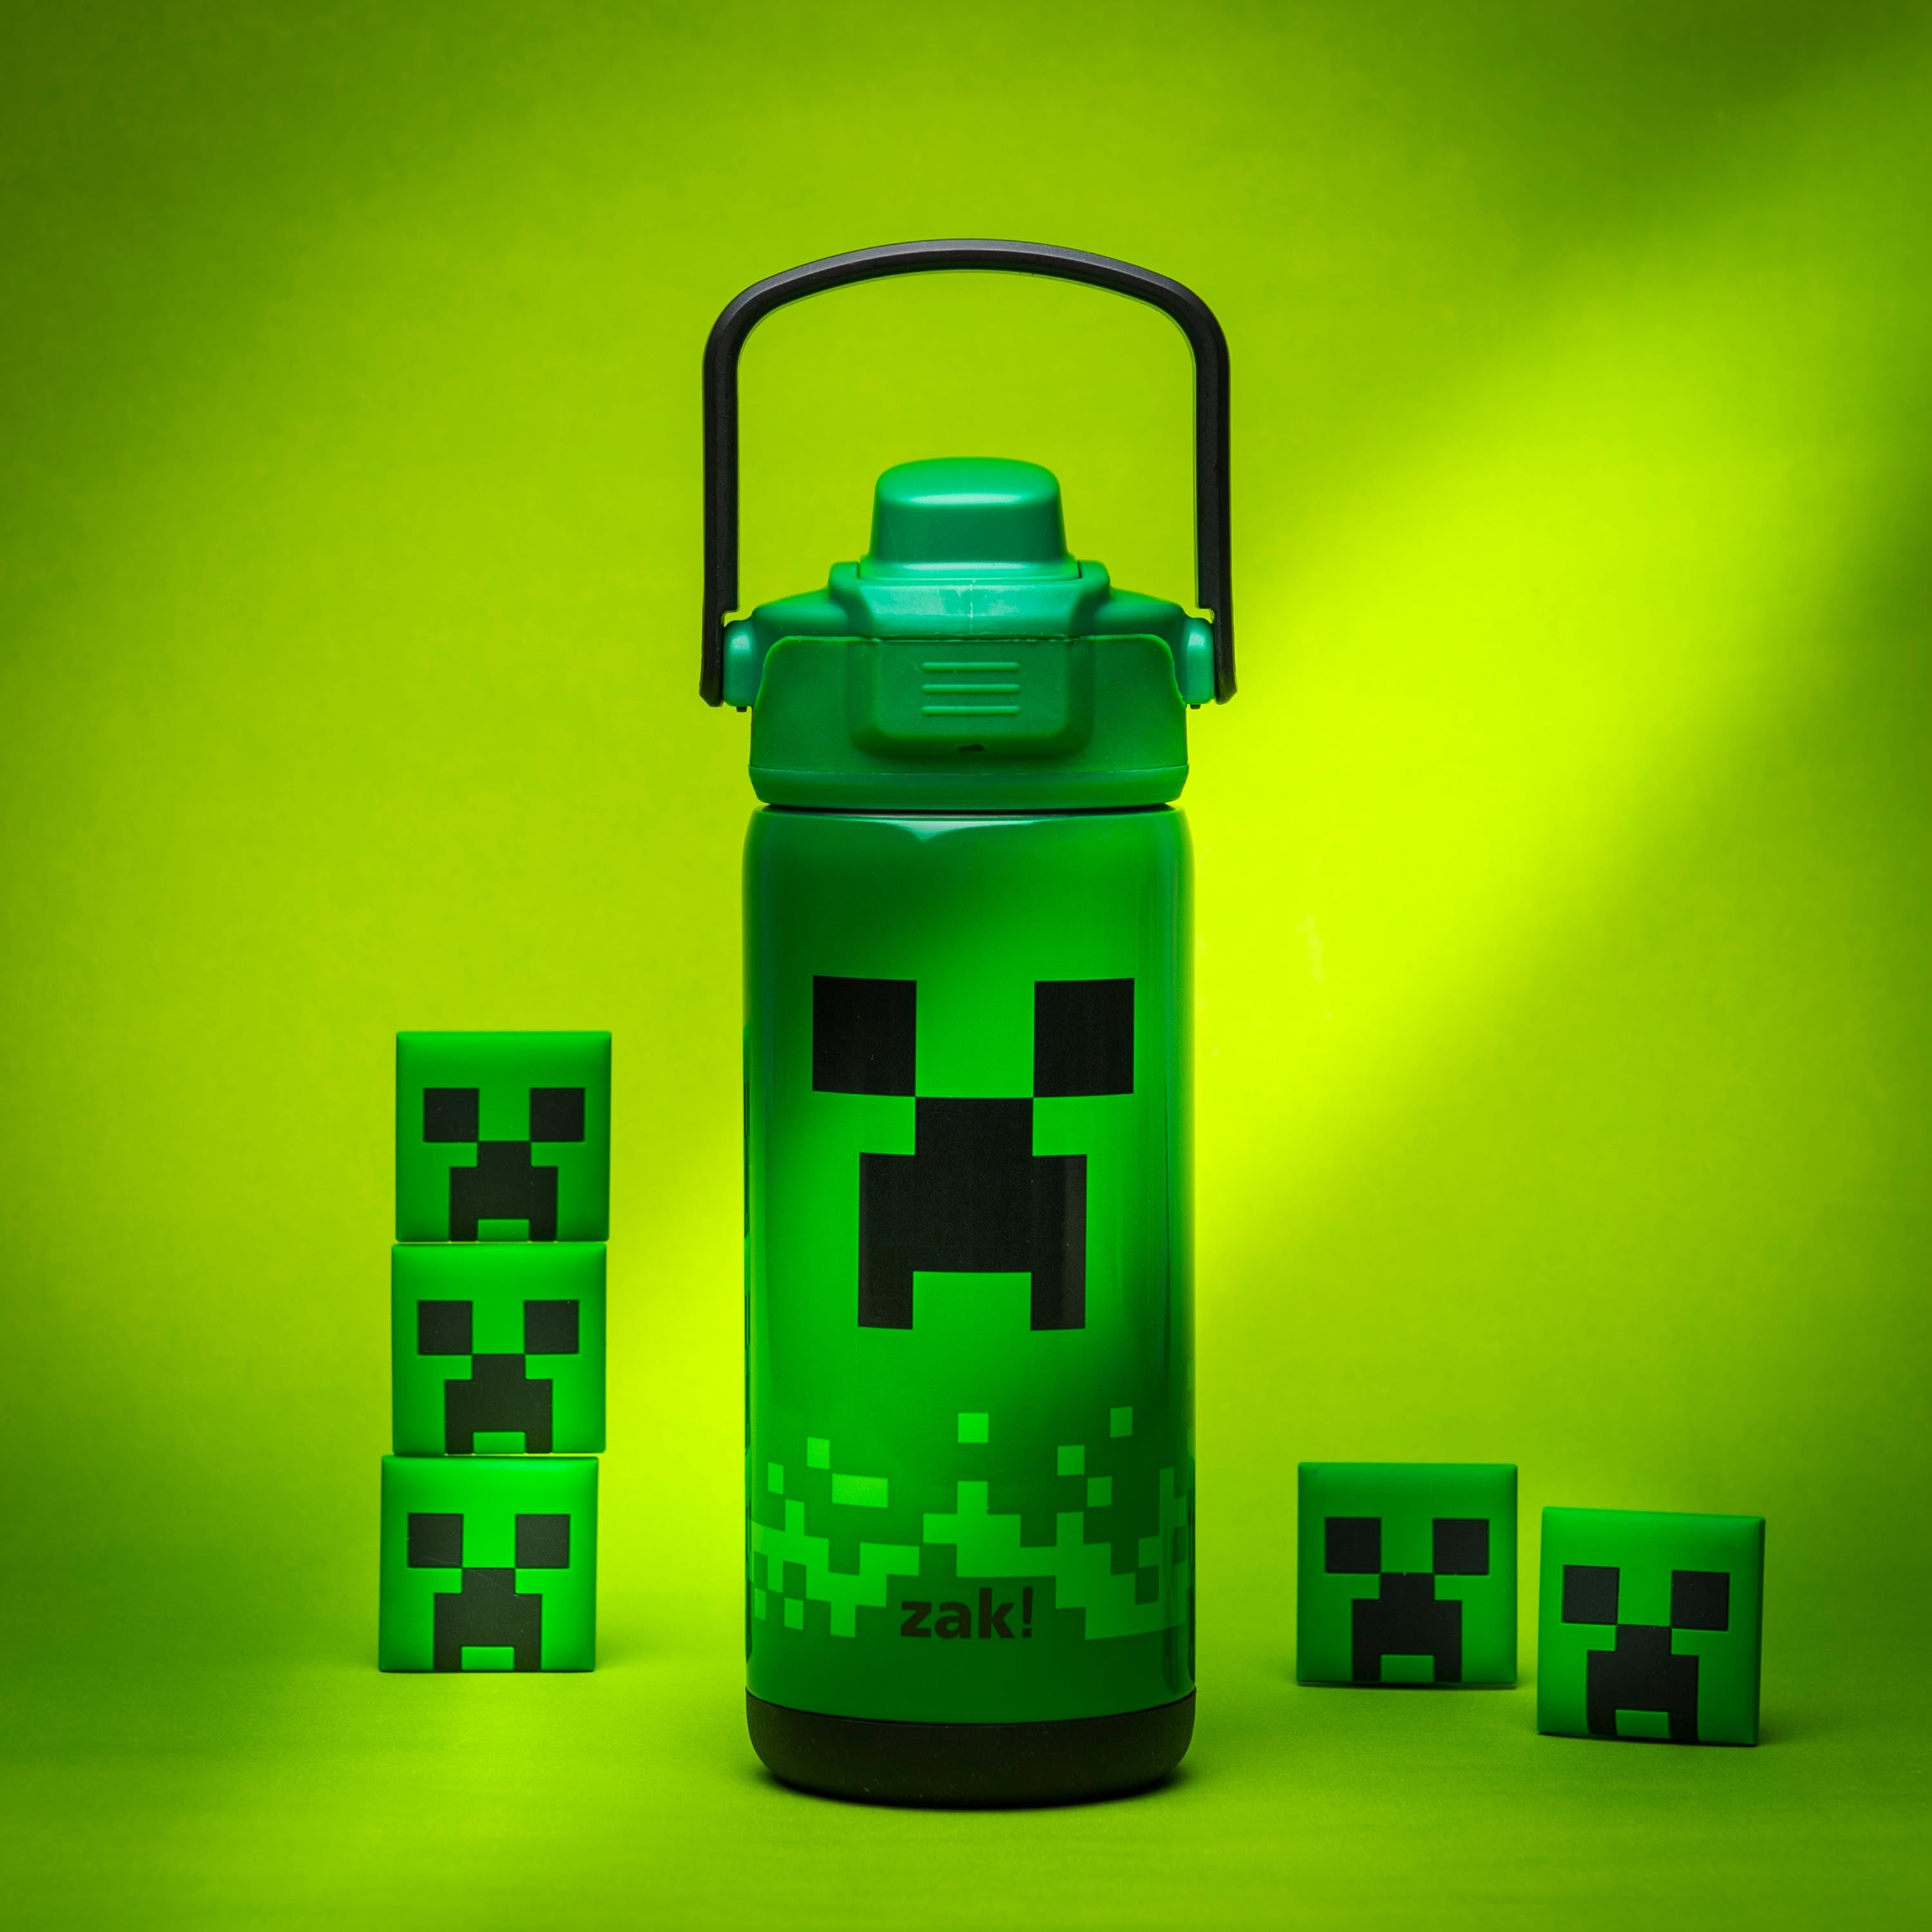  zak! Beacon Insulated Bottle, Minecraft - 20 oz